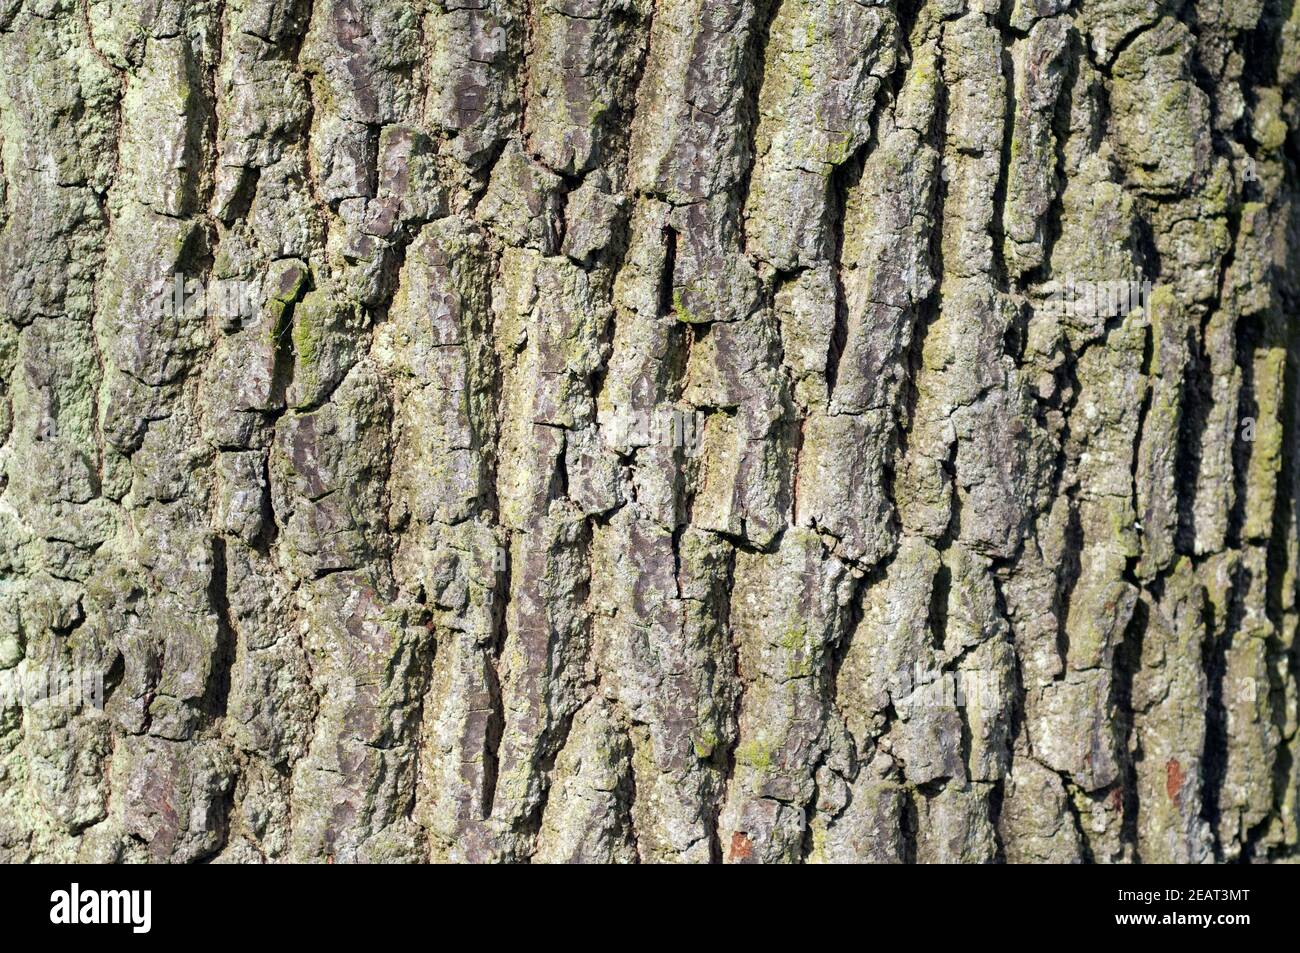 Eichenrinde, Stamm, Quercus  Robur Stock Photo